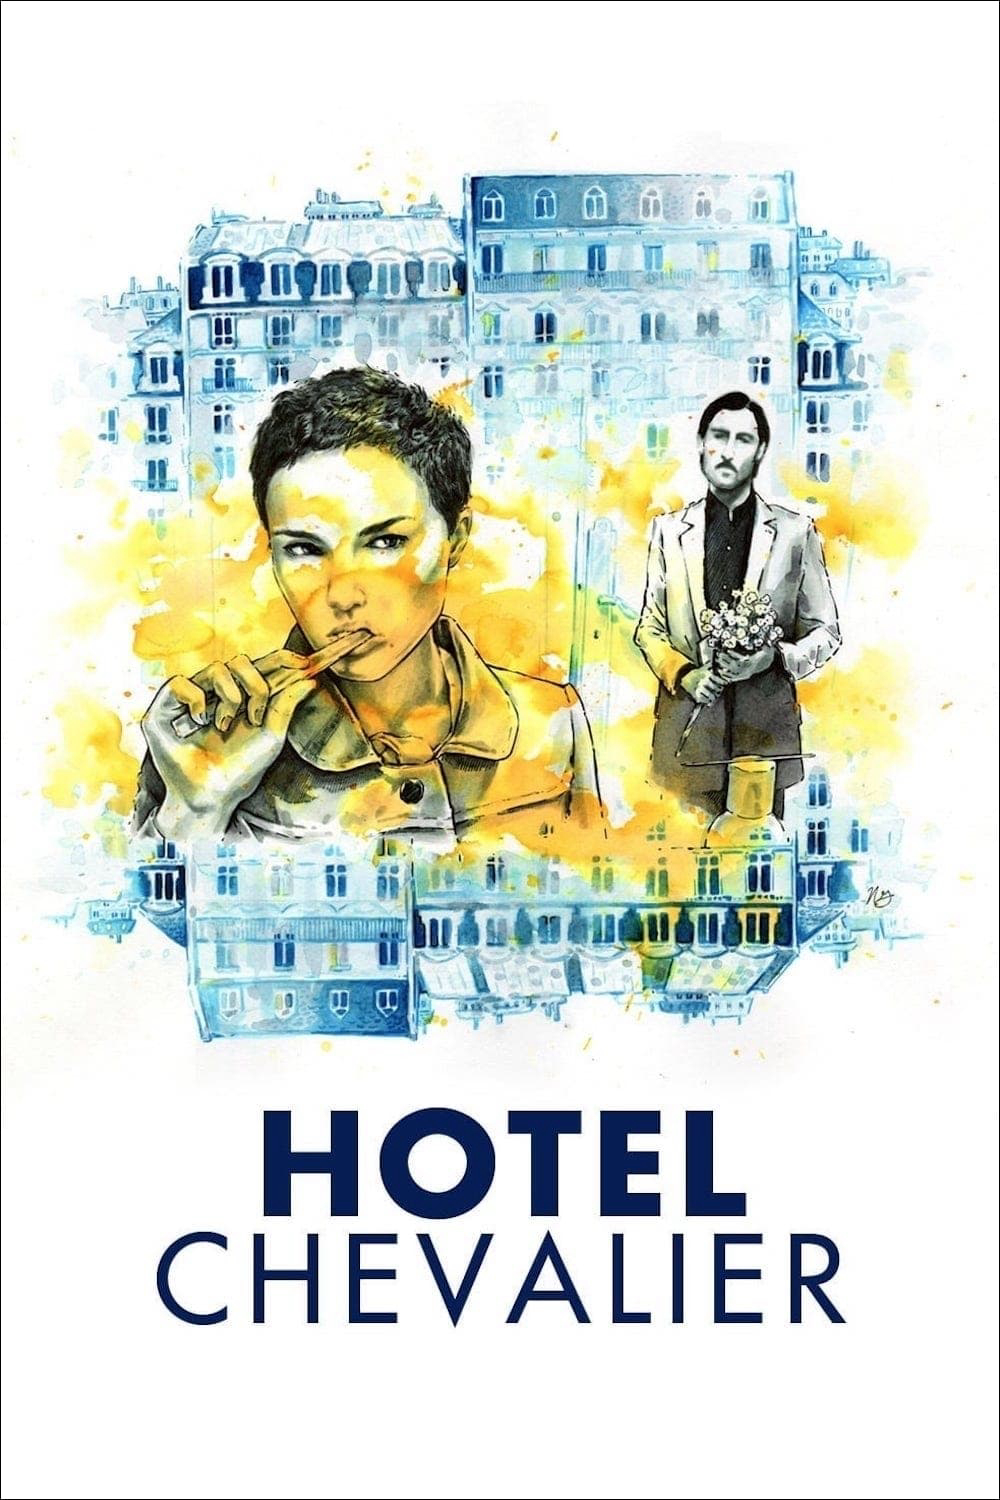 Khách Sạn Chevalier - Hotel Chevalier